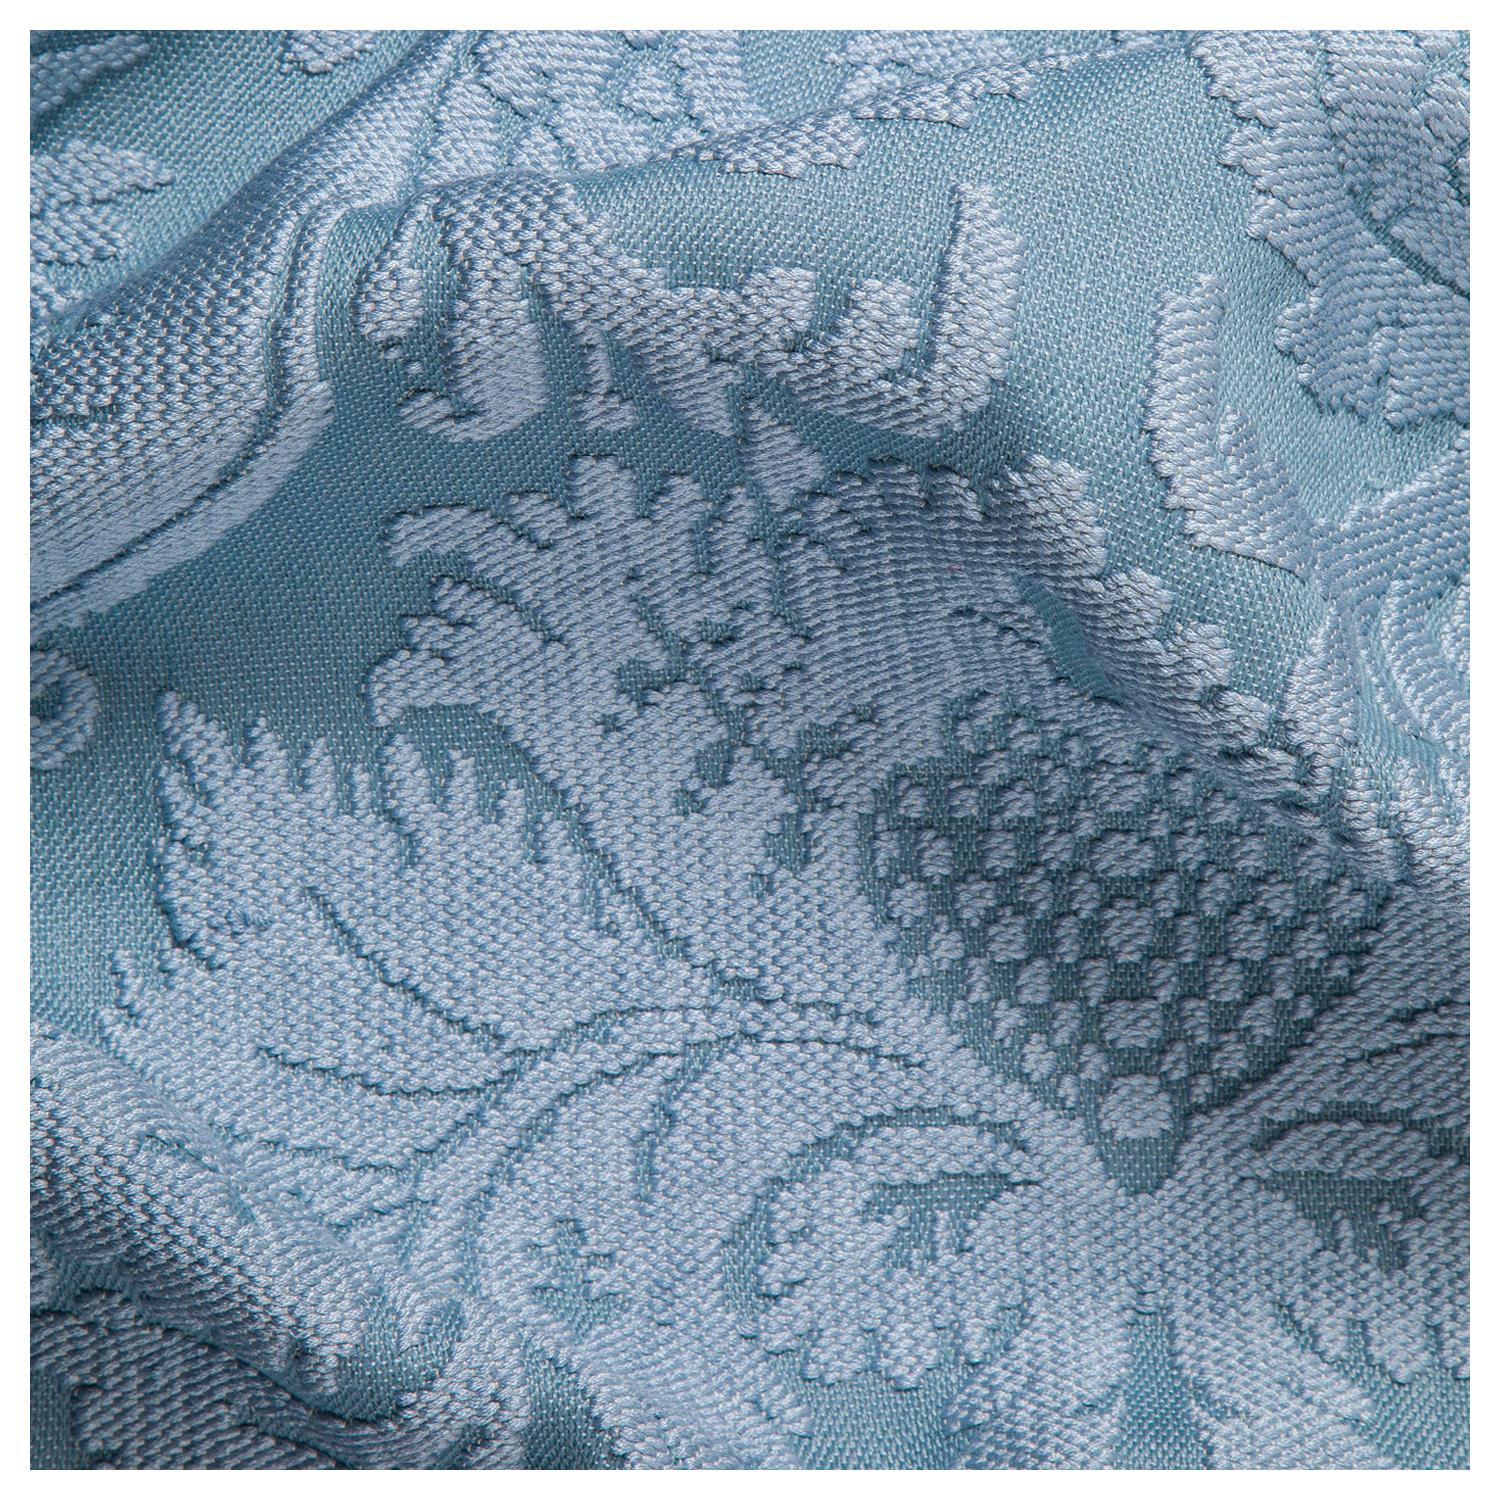 Fabric 1700 Hand Loom Brocade Guicciardini Pattern, Florence, Italy